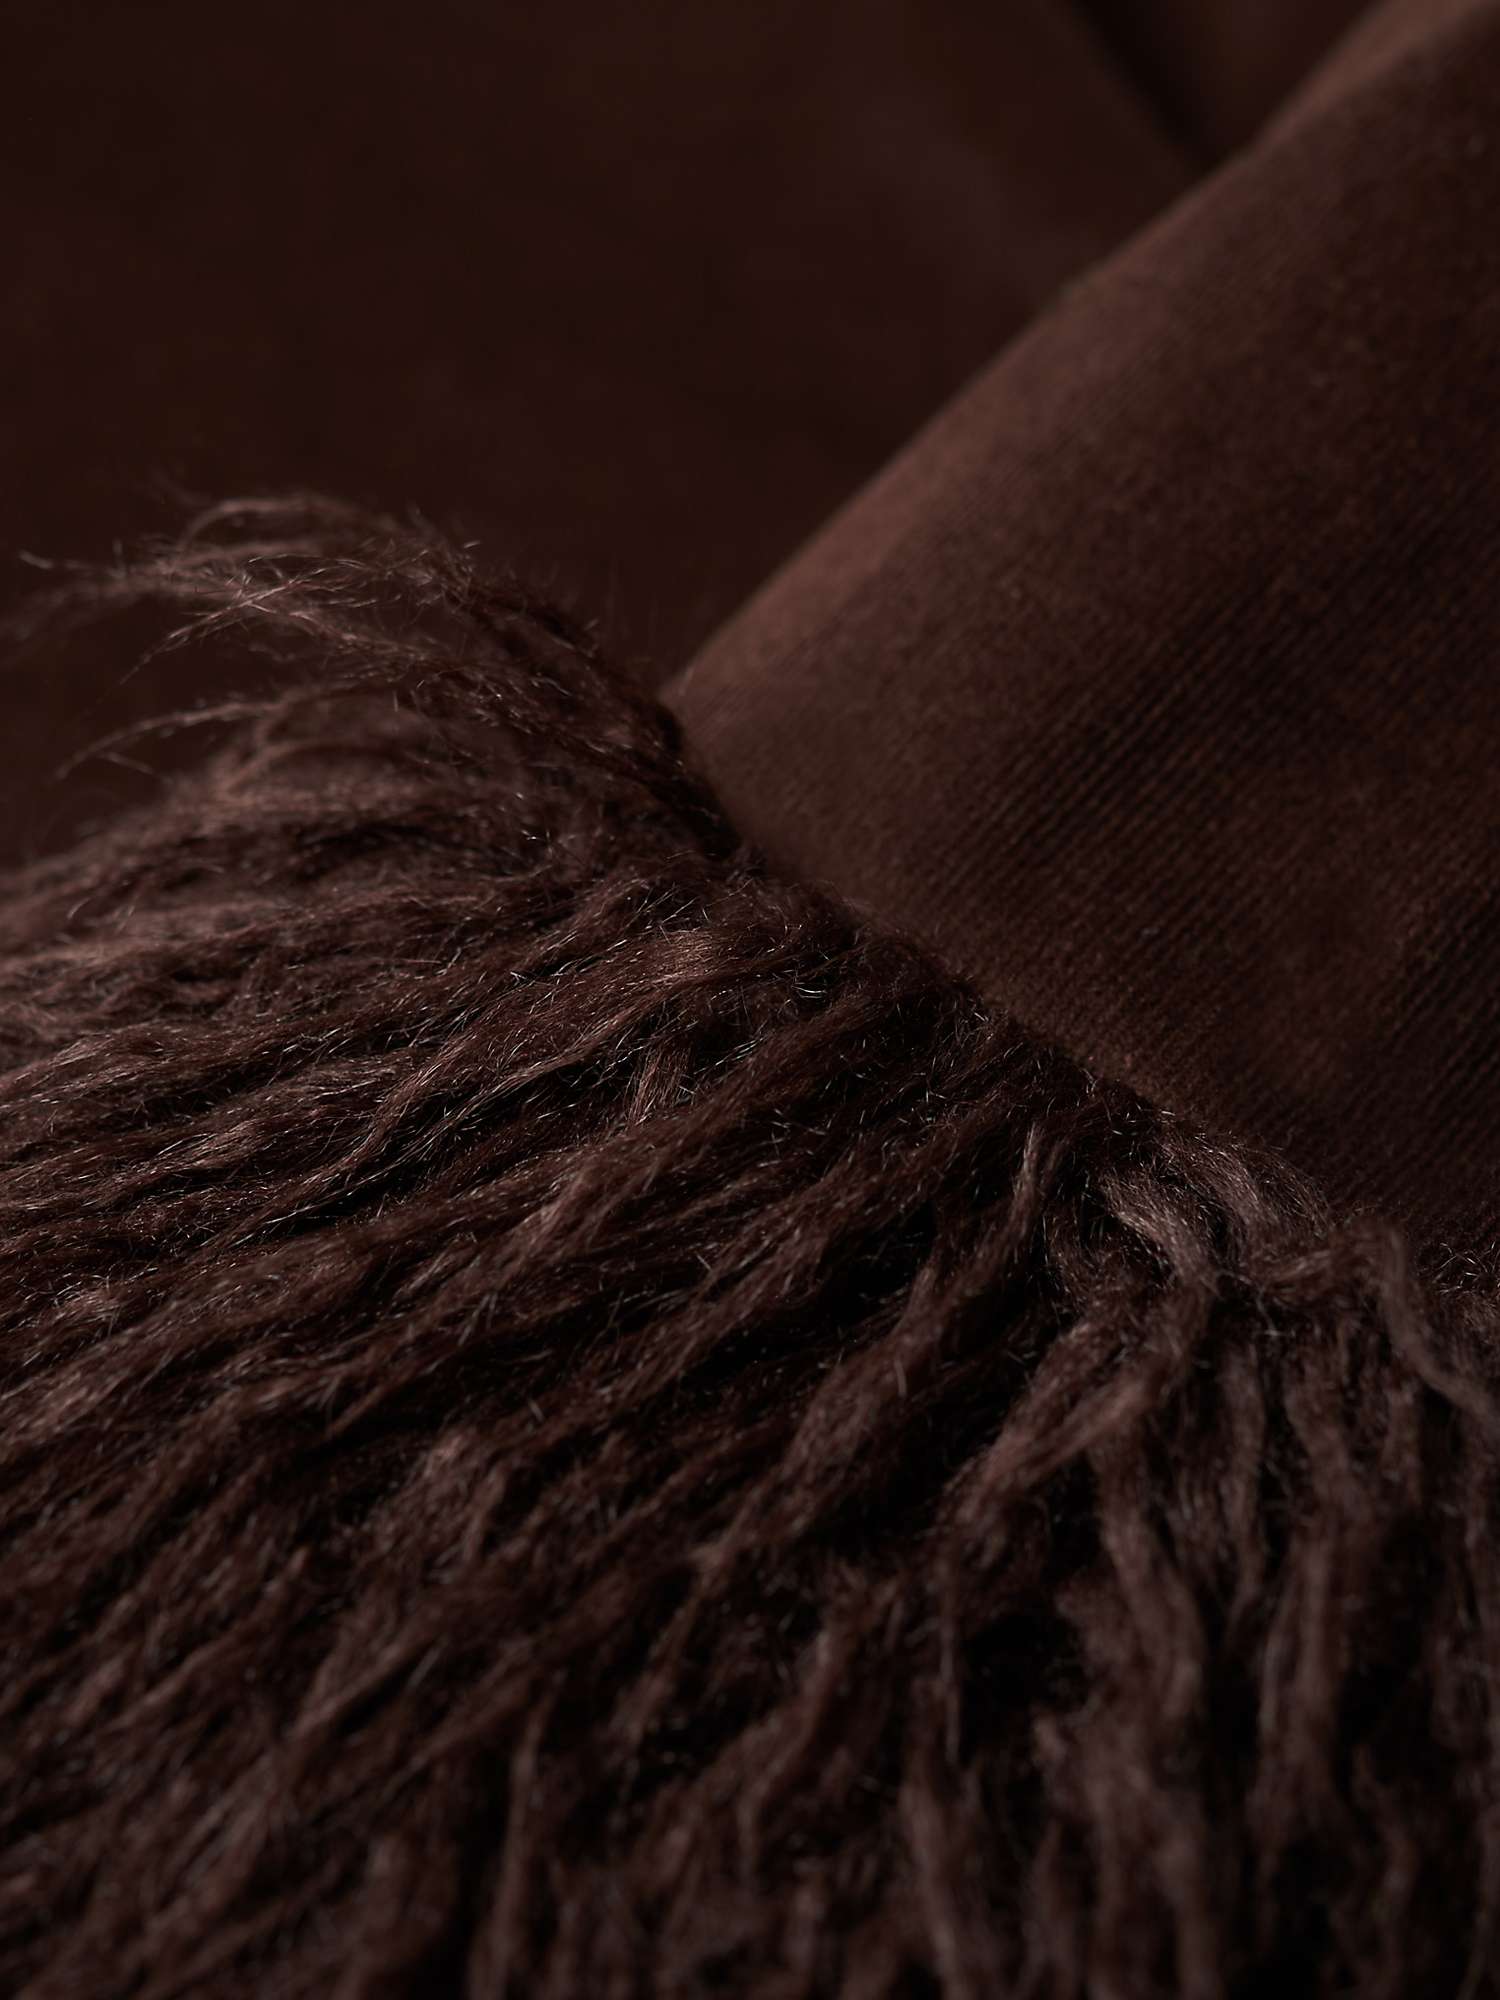 Buy Superdry Faux Fur Lined Afghan Coat Online at johnlewis.com